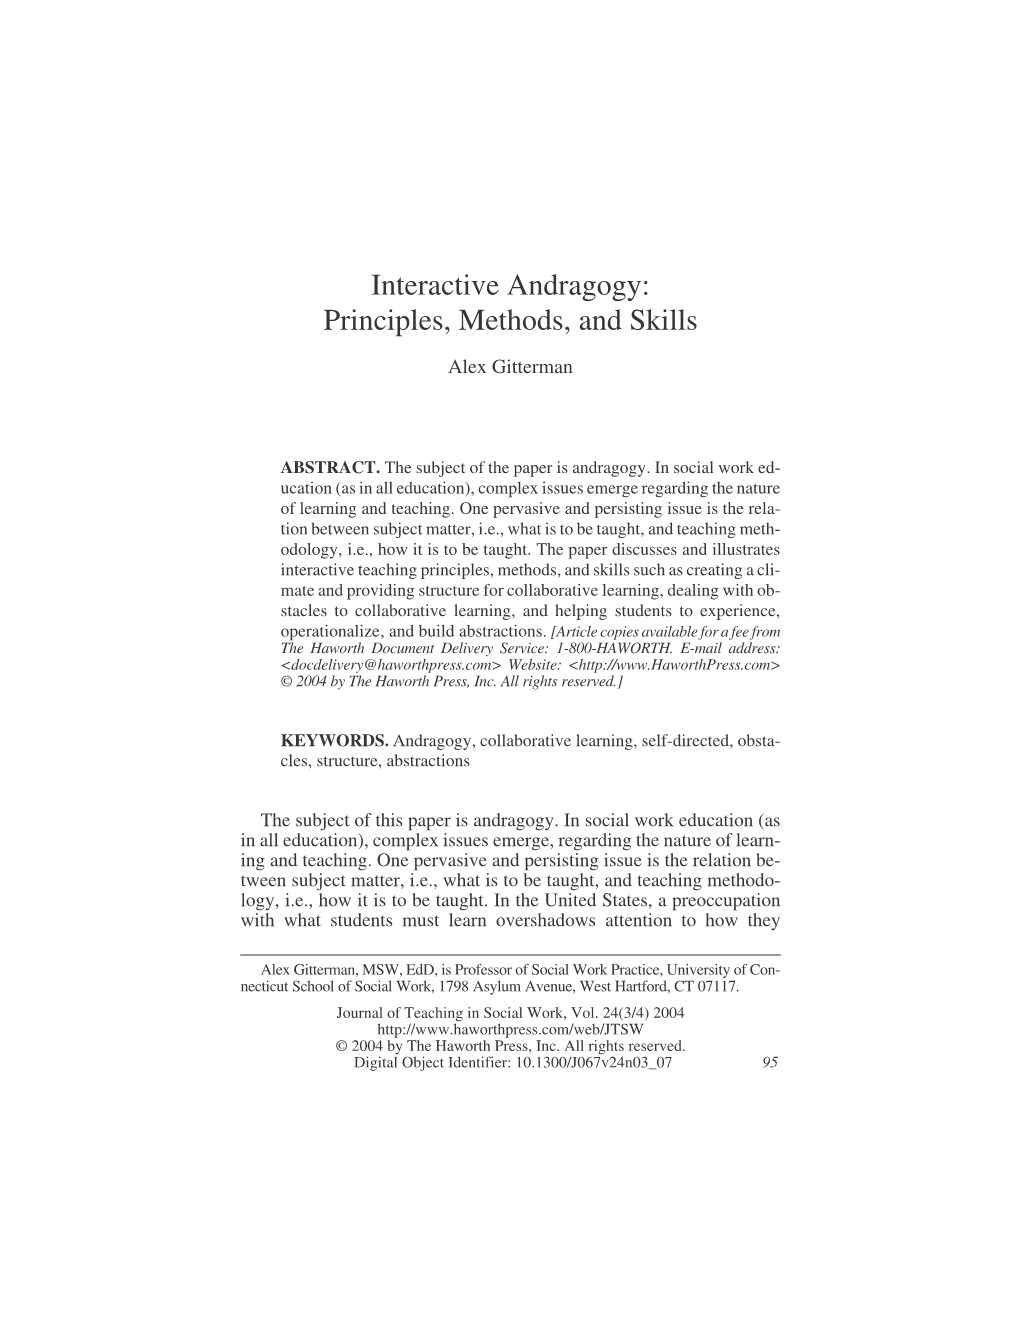 Interactive Andragogy: Principles, Methods, and Skills